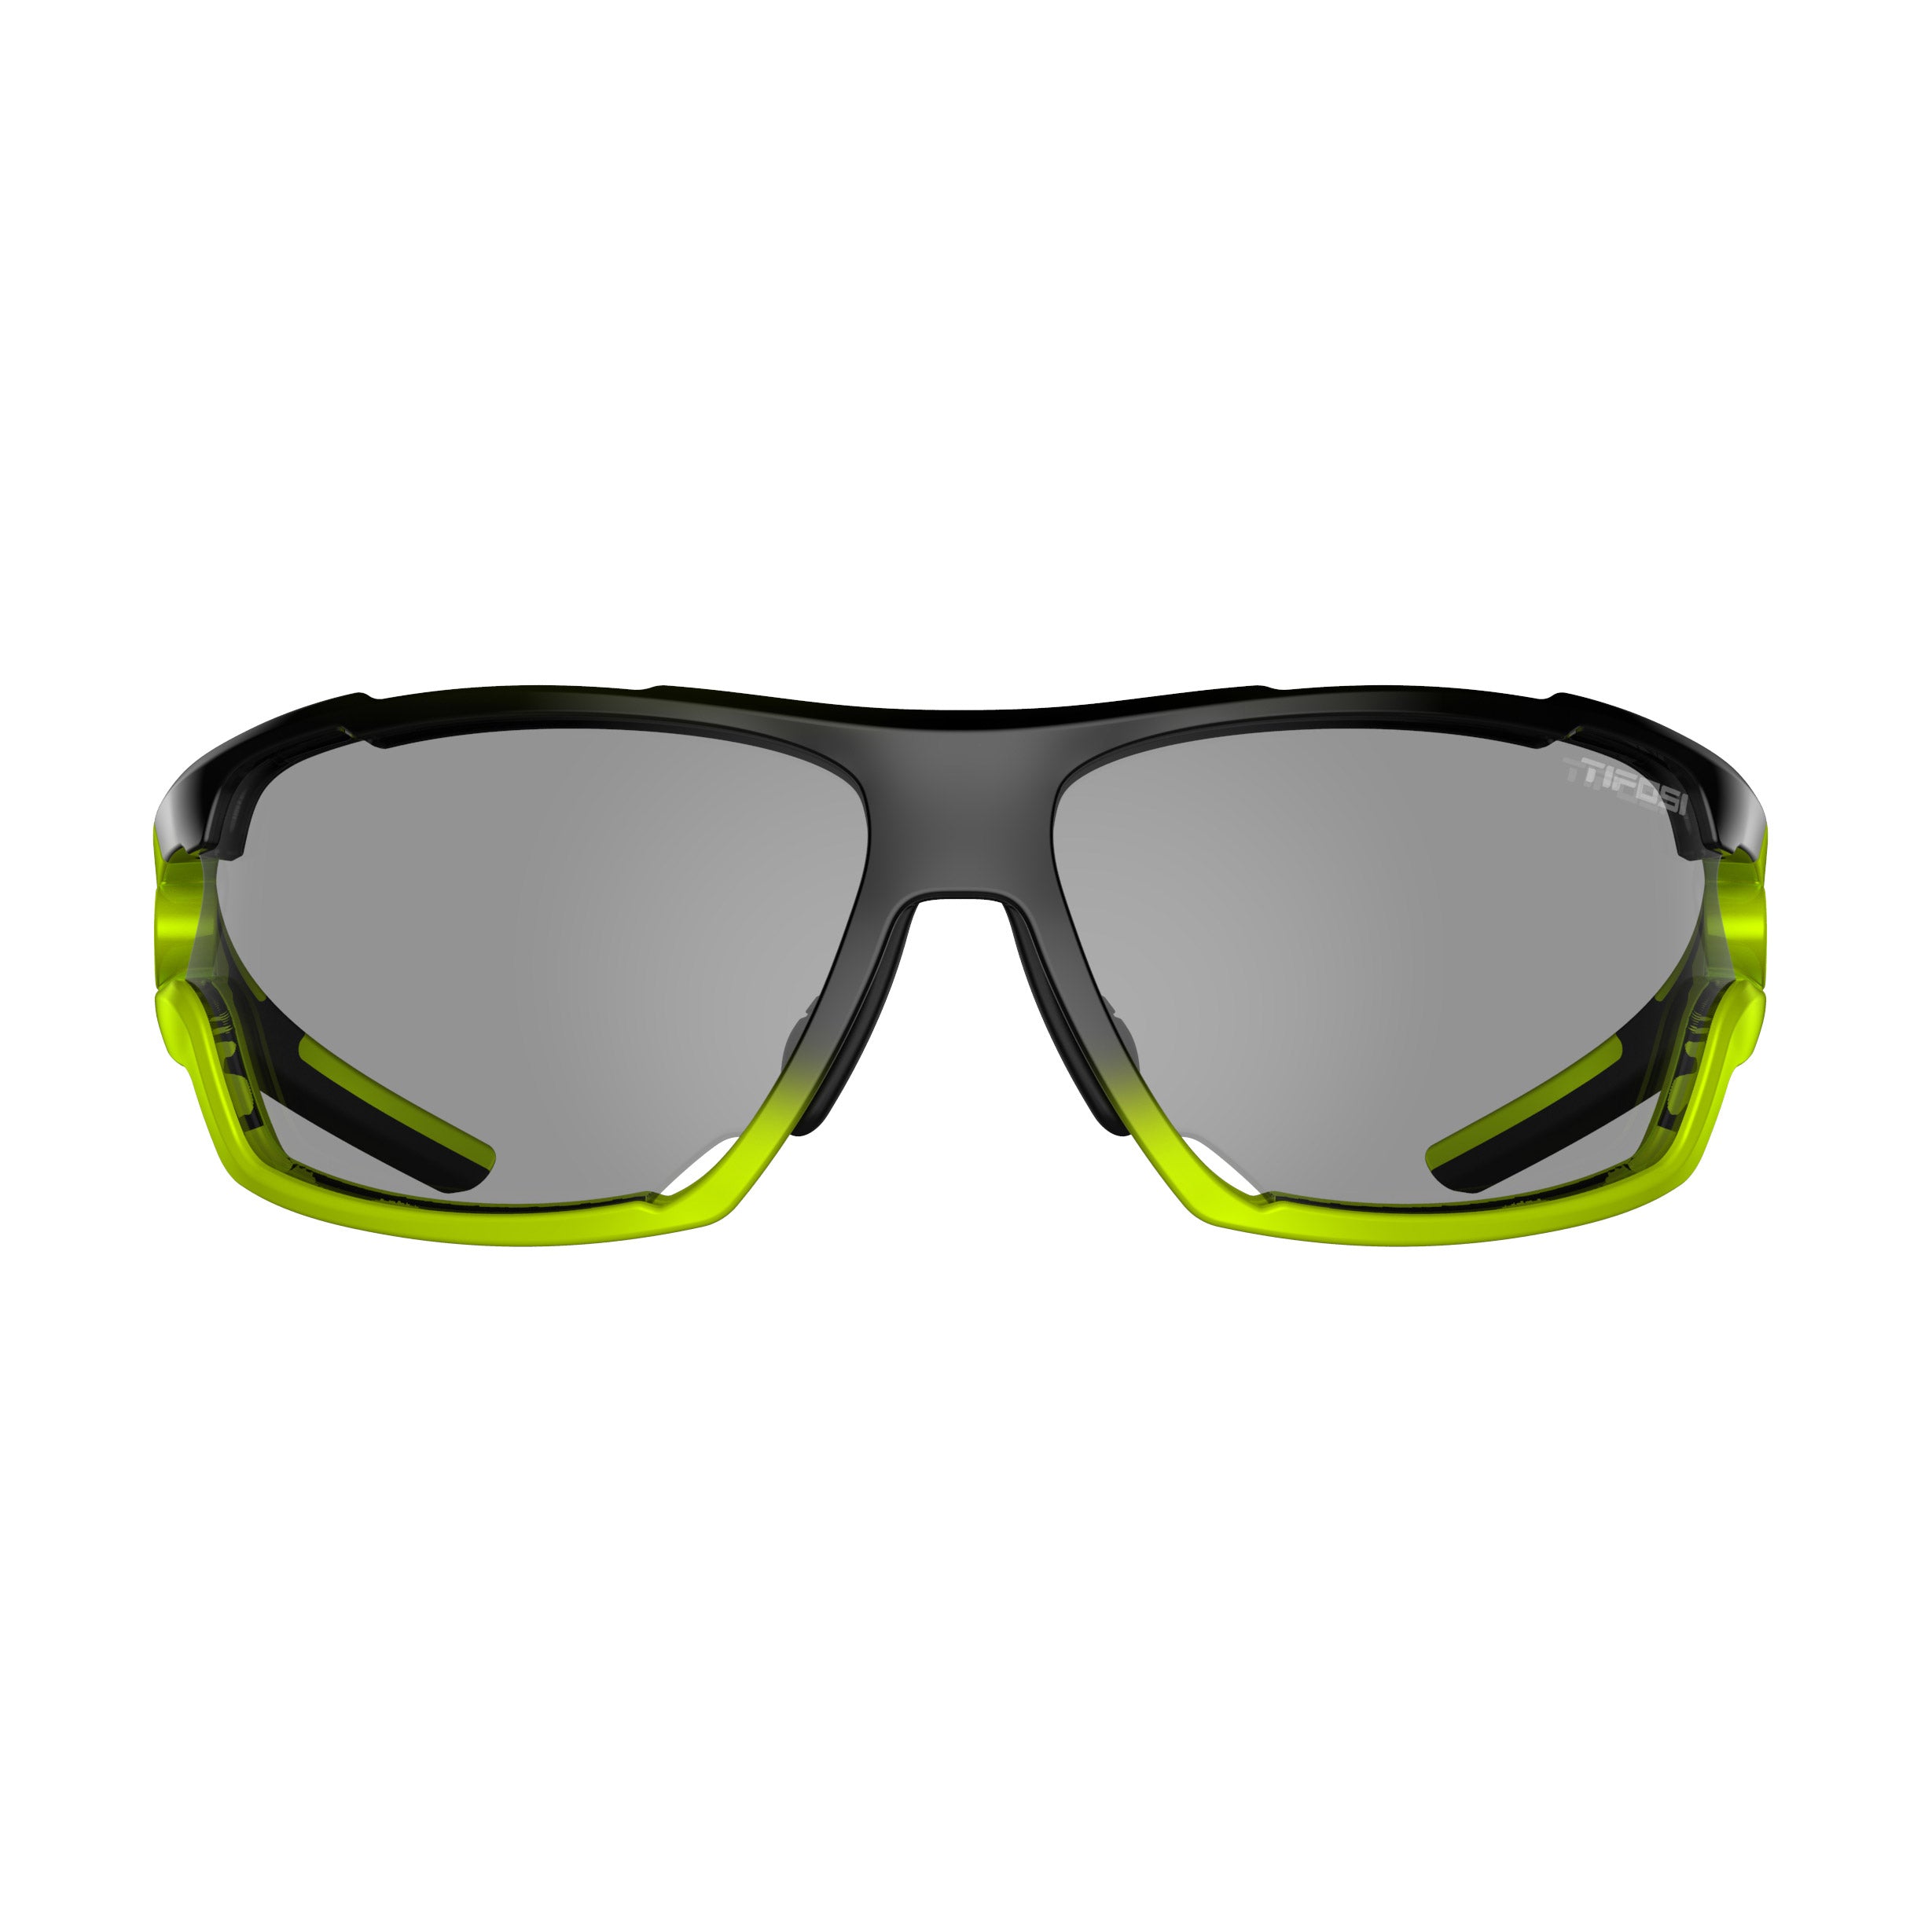 Gafas de sol TIFOSI Amok Race Neon Fotocromáticas